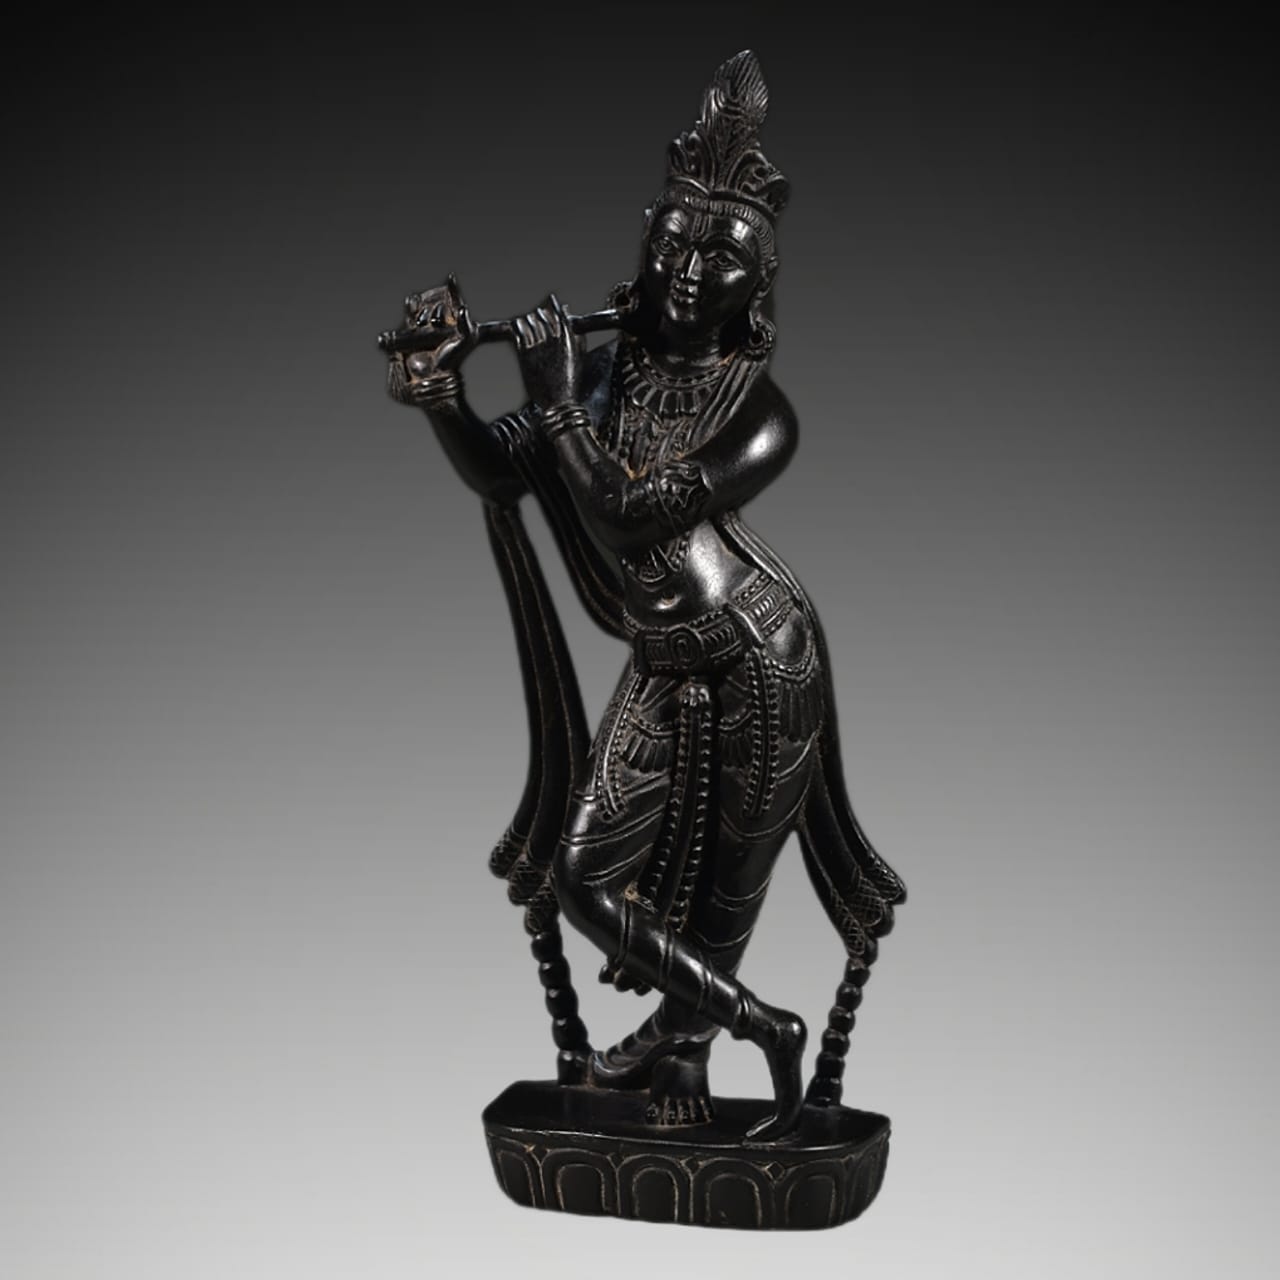 Krishna Black Stone, Krishna statue, Krishna Idol, krishna idol statue in living room, lord krishna